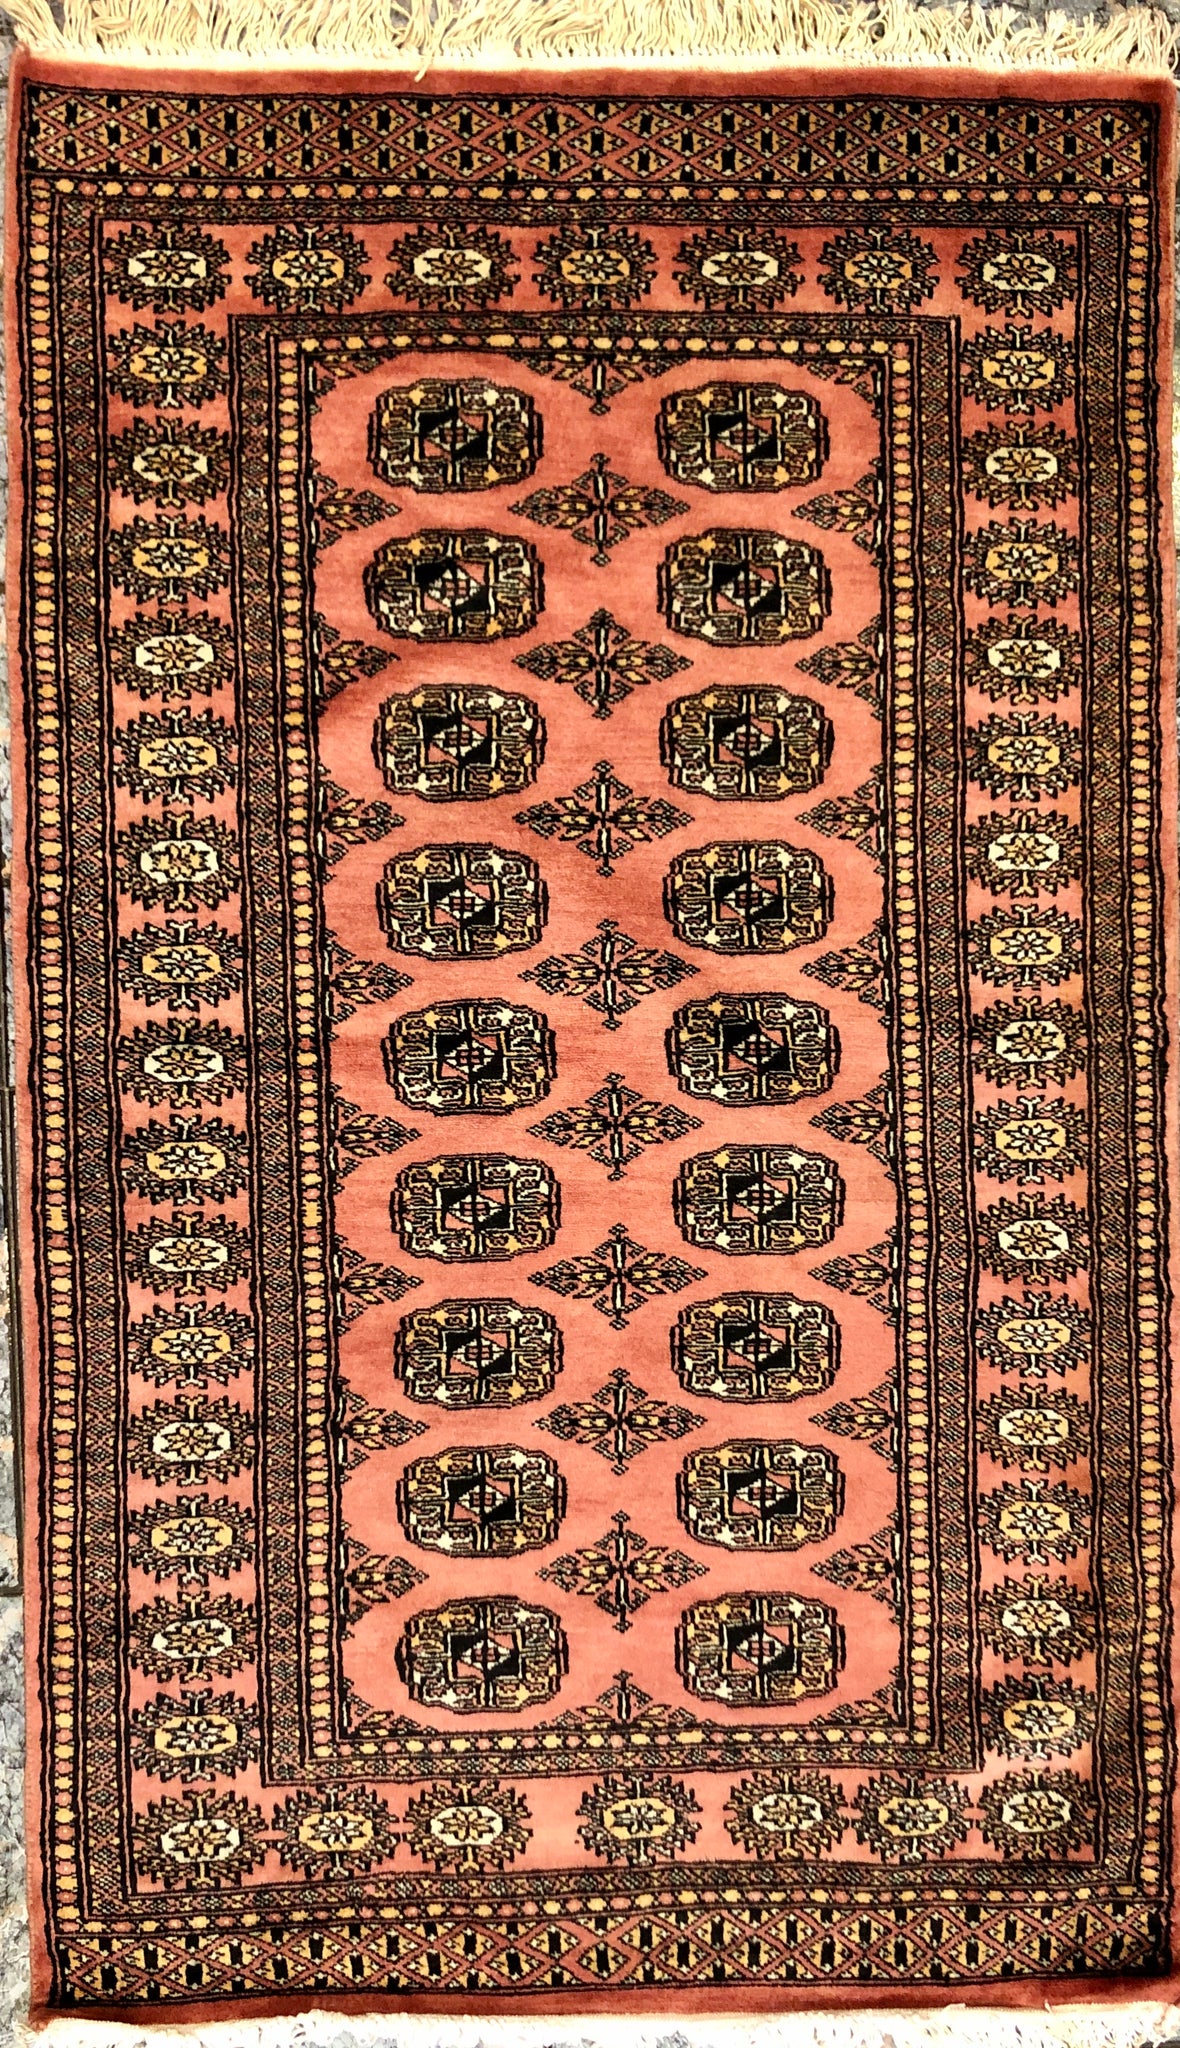 A Handmade Pakistani Wool Carpet.